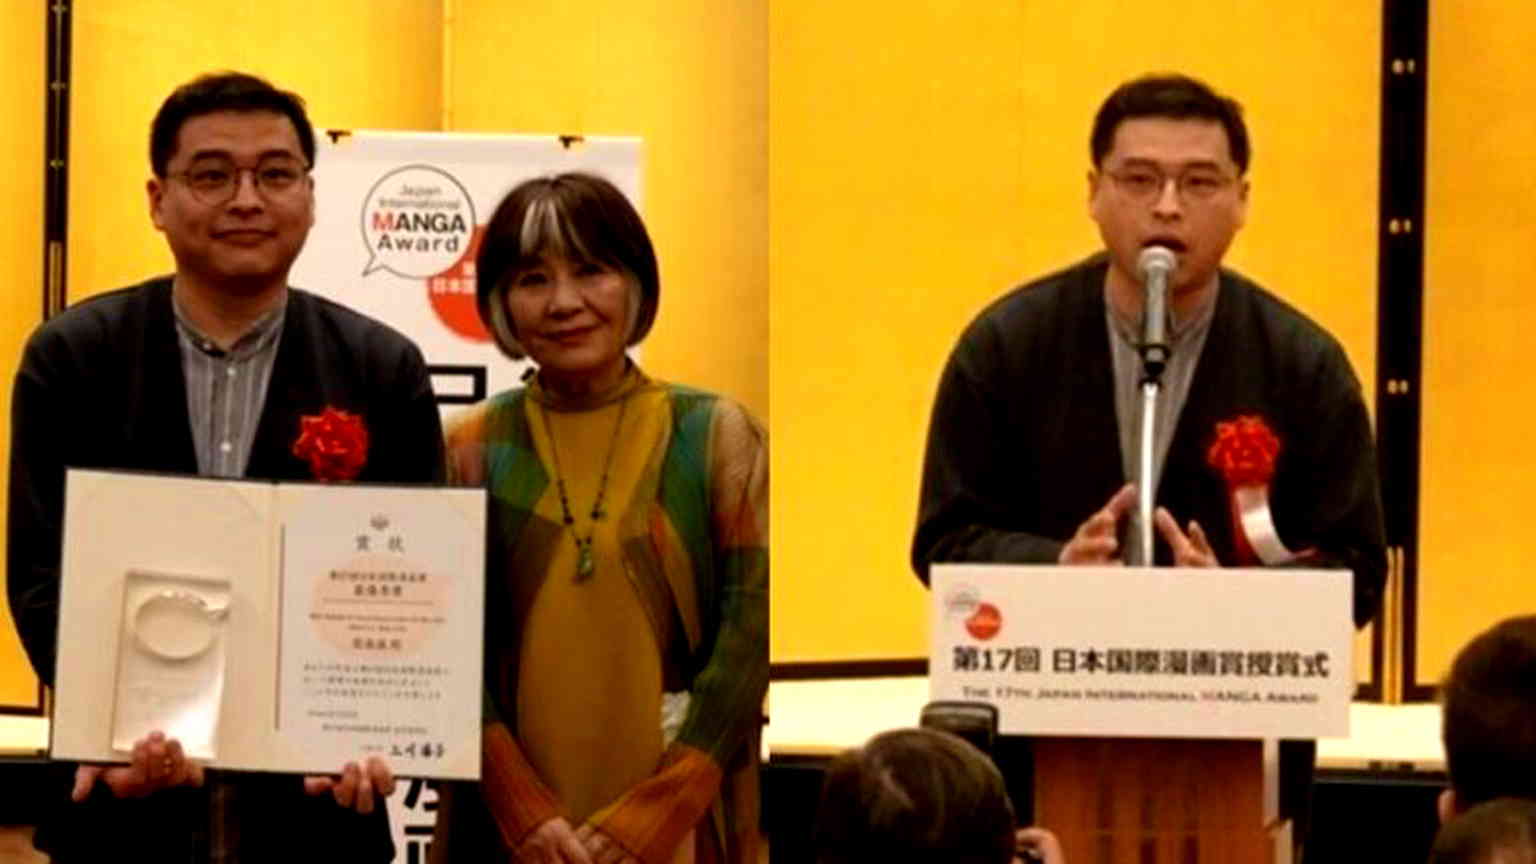 Taiwanese artist wins top prize at Japan manga awards